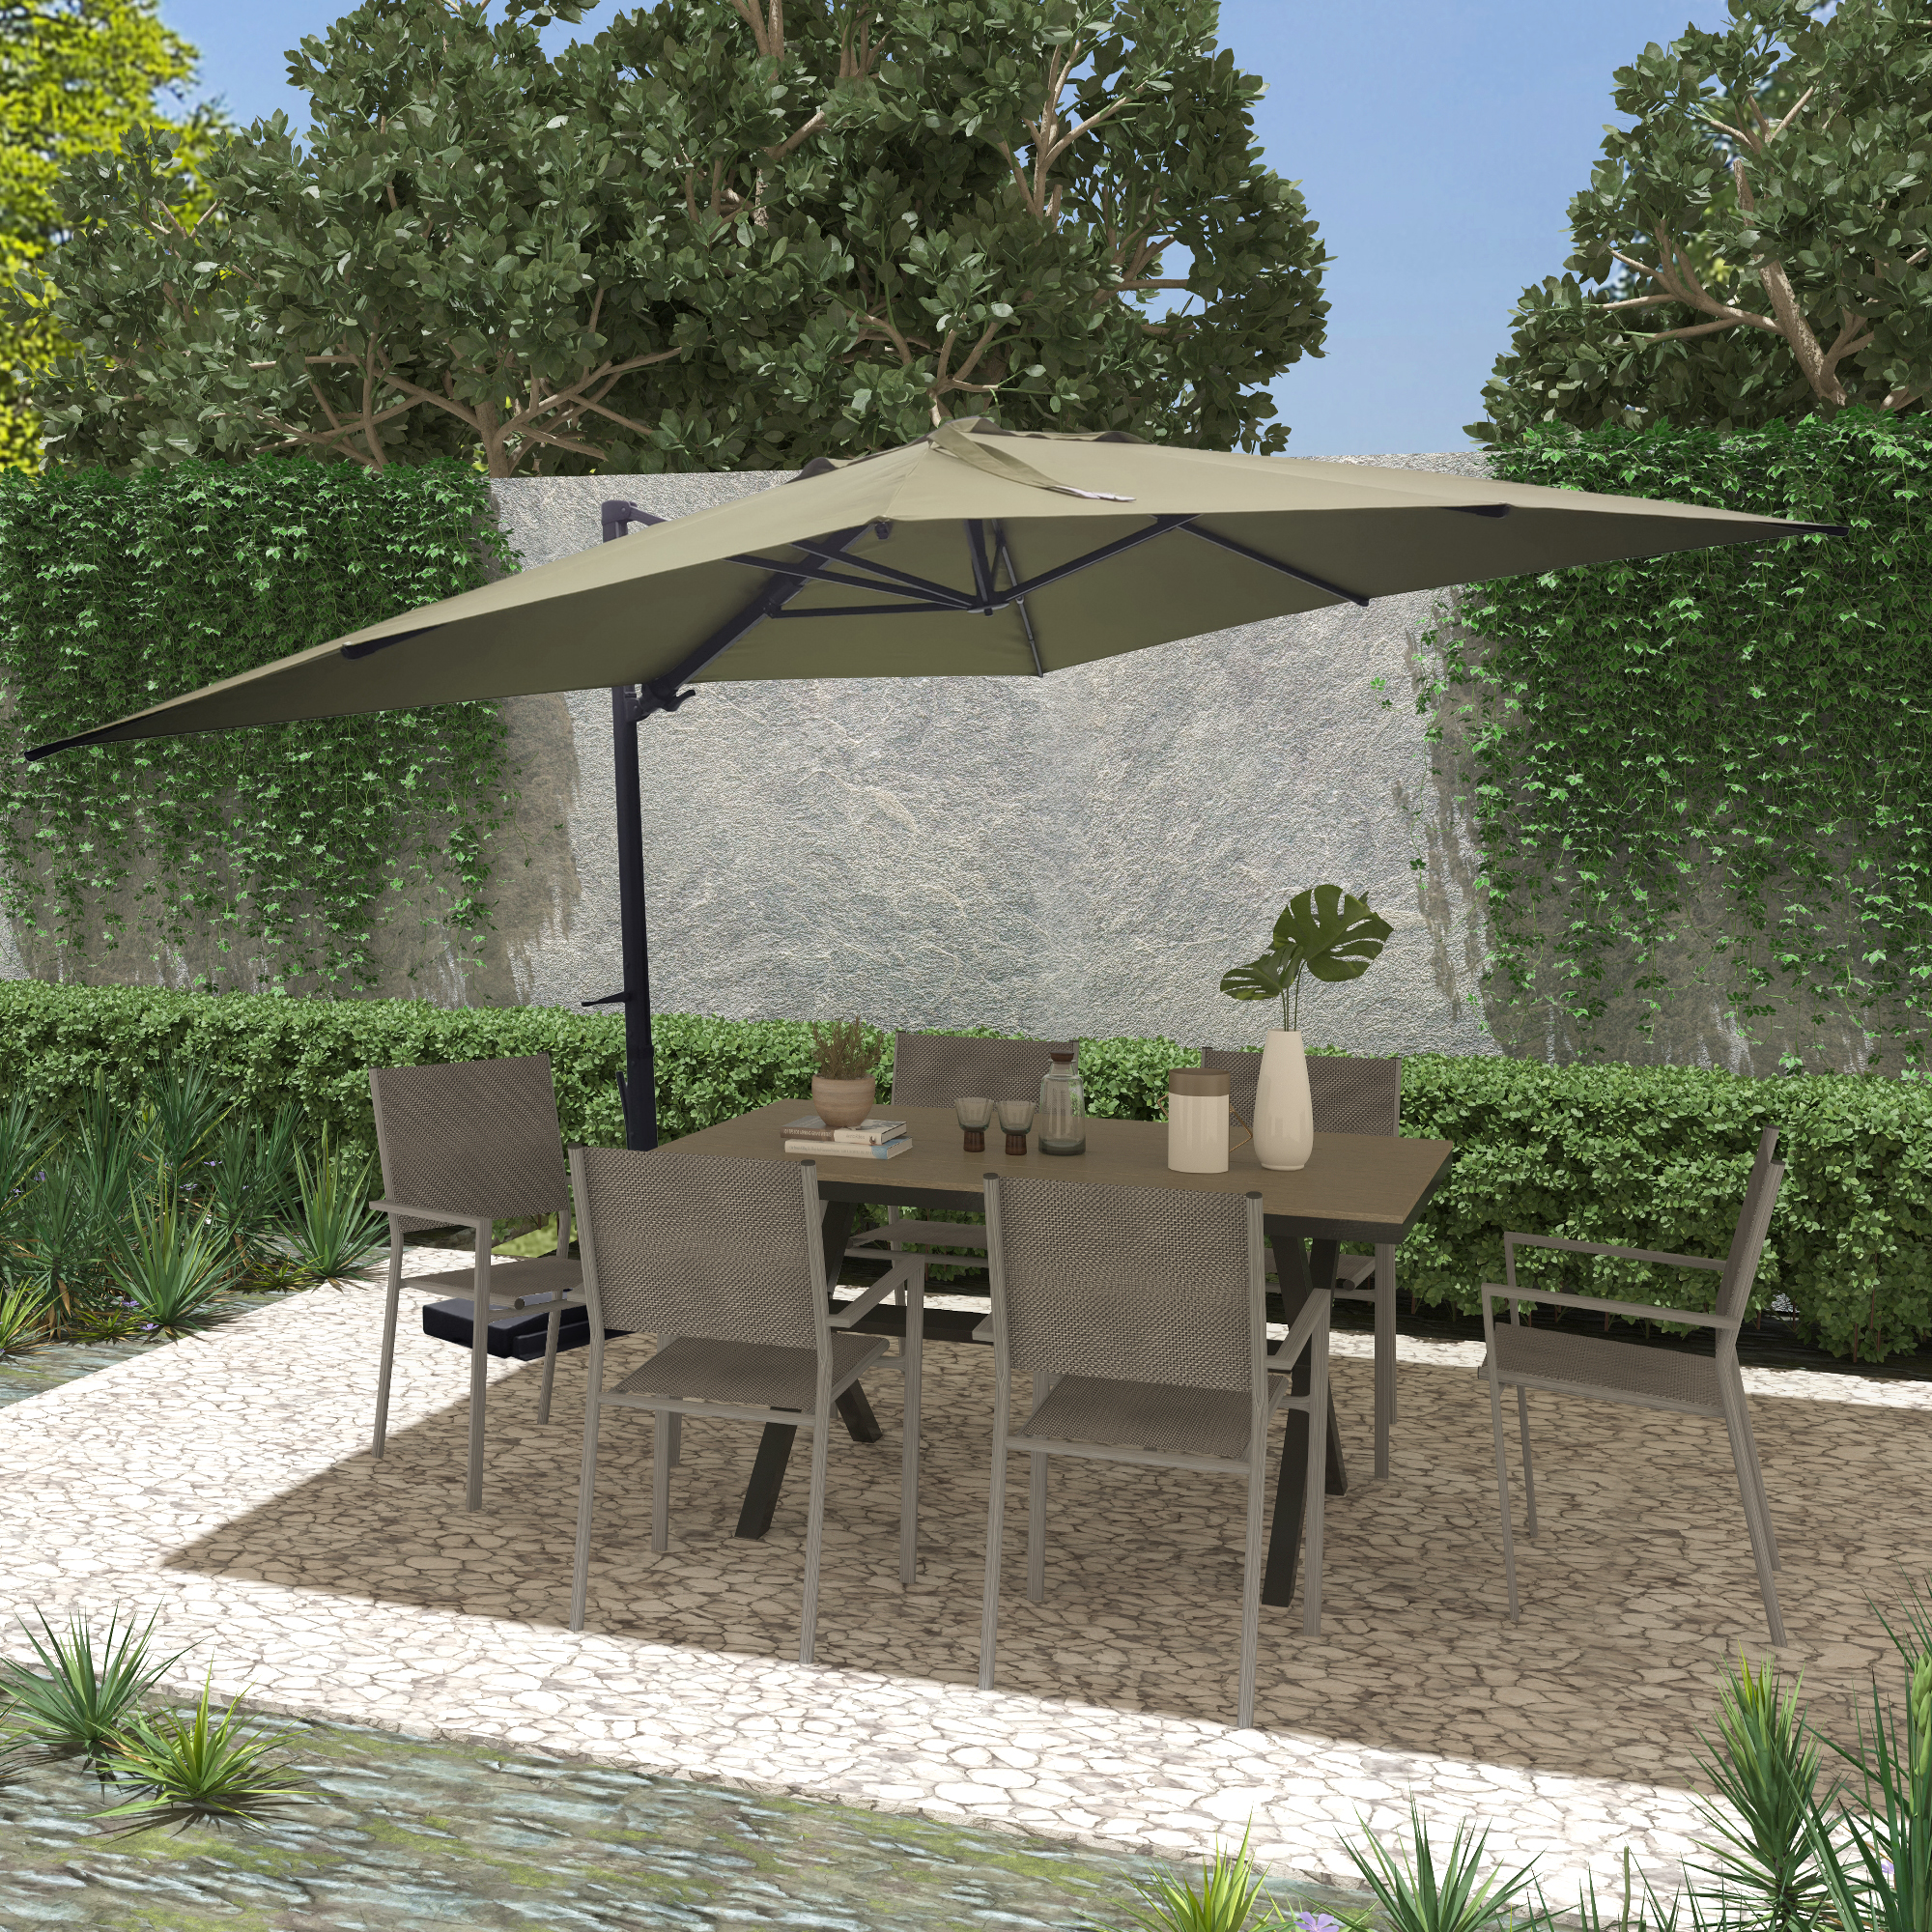 Mondawe 10 ft. Square Patio Cantilever Umbrella Aluminum Tilt Outdoor Hanging for Garden Balcony